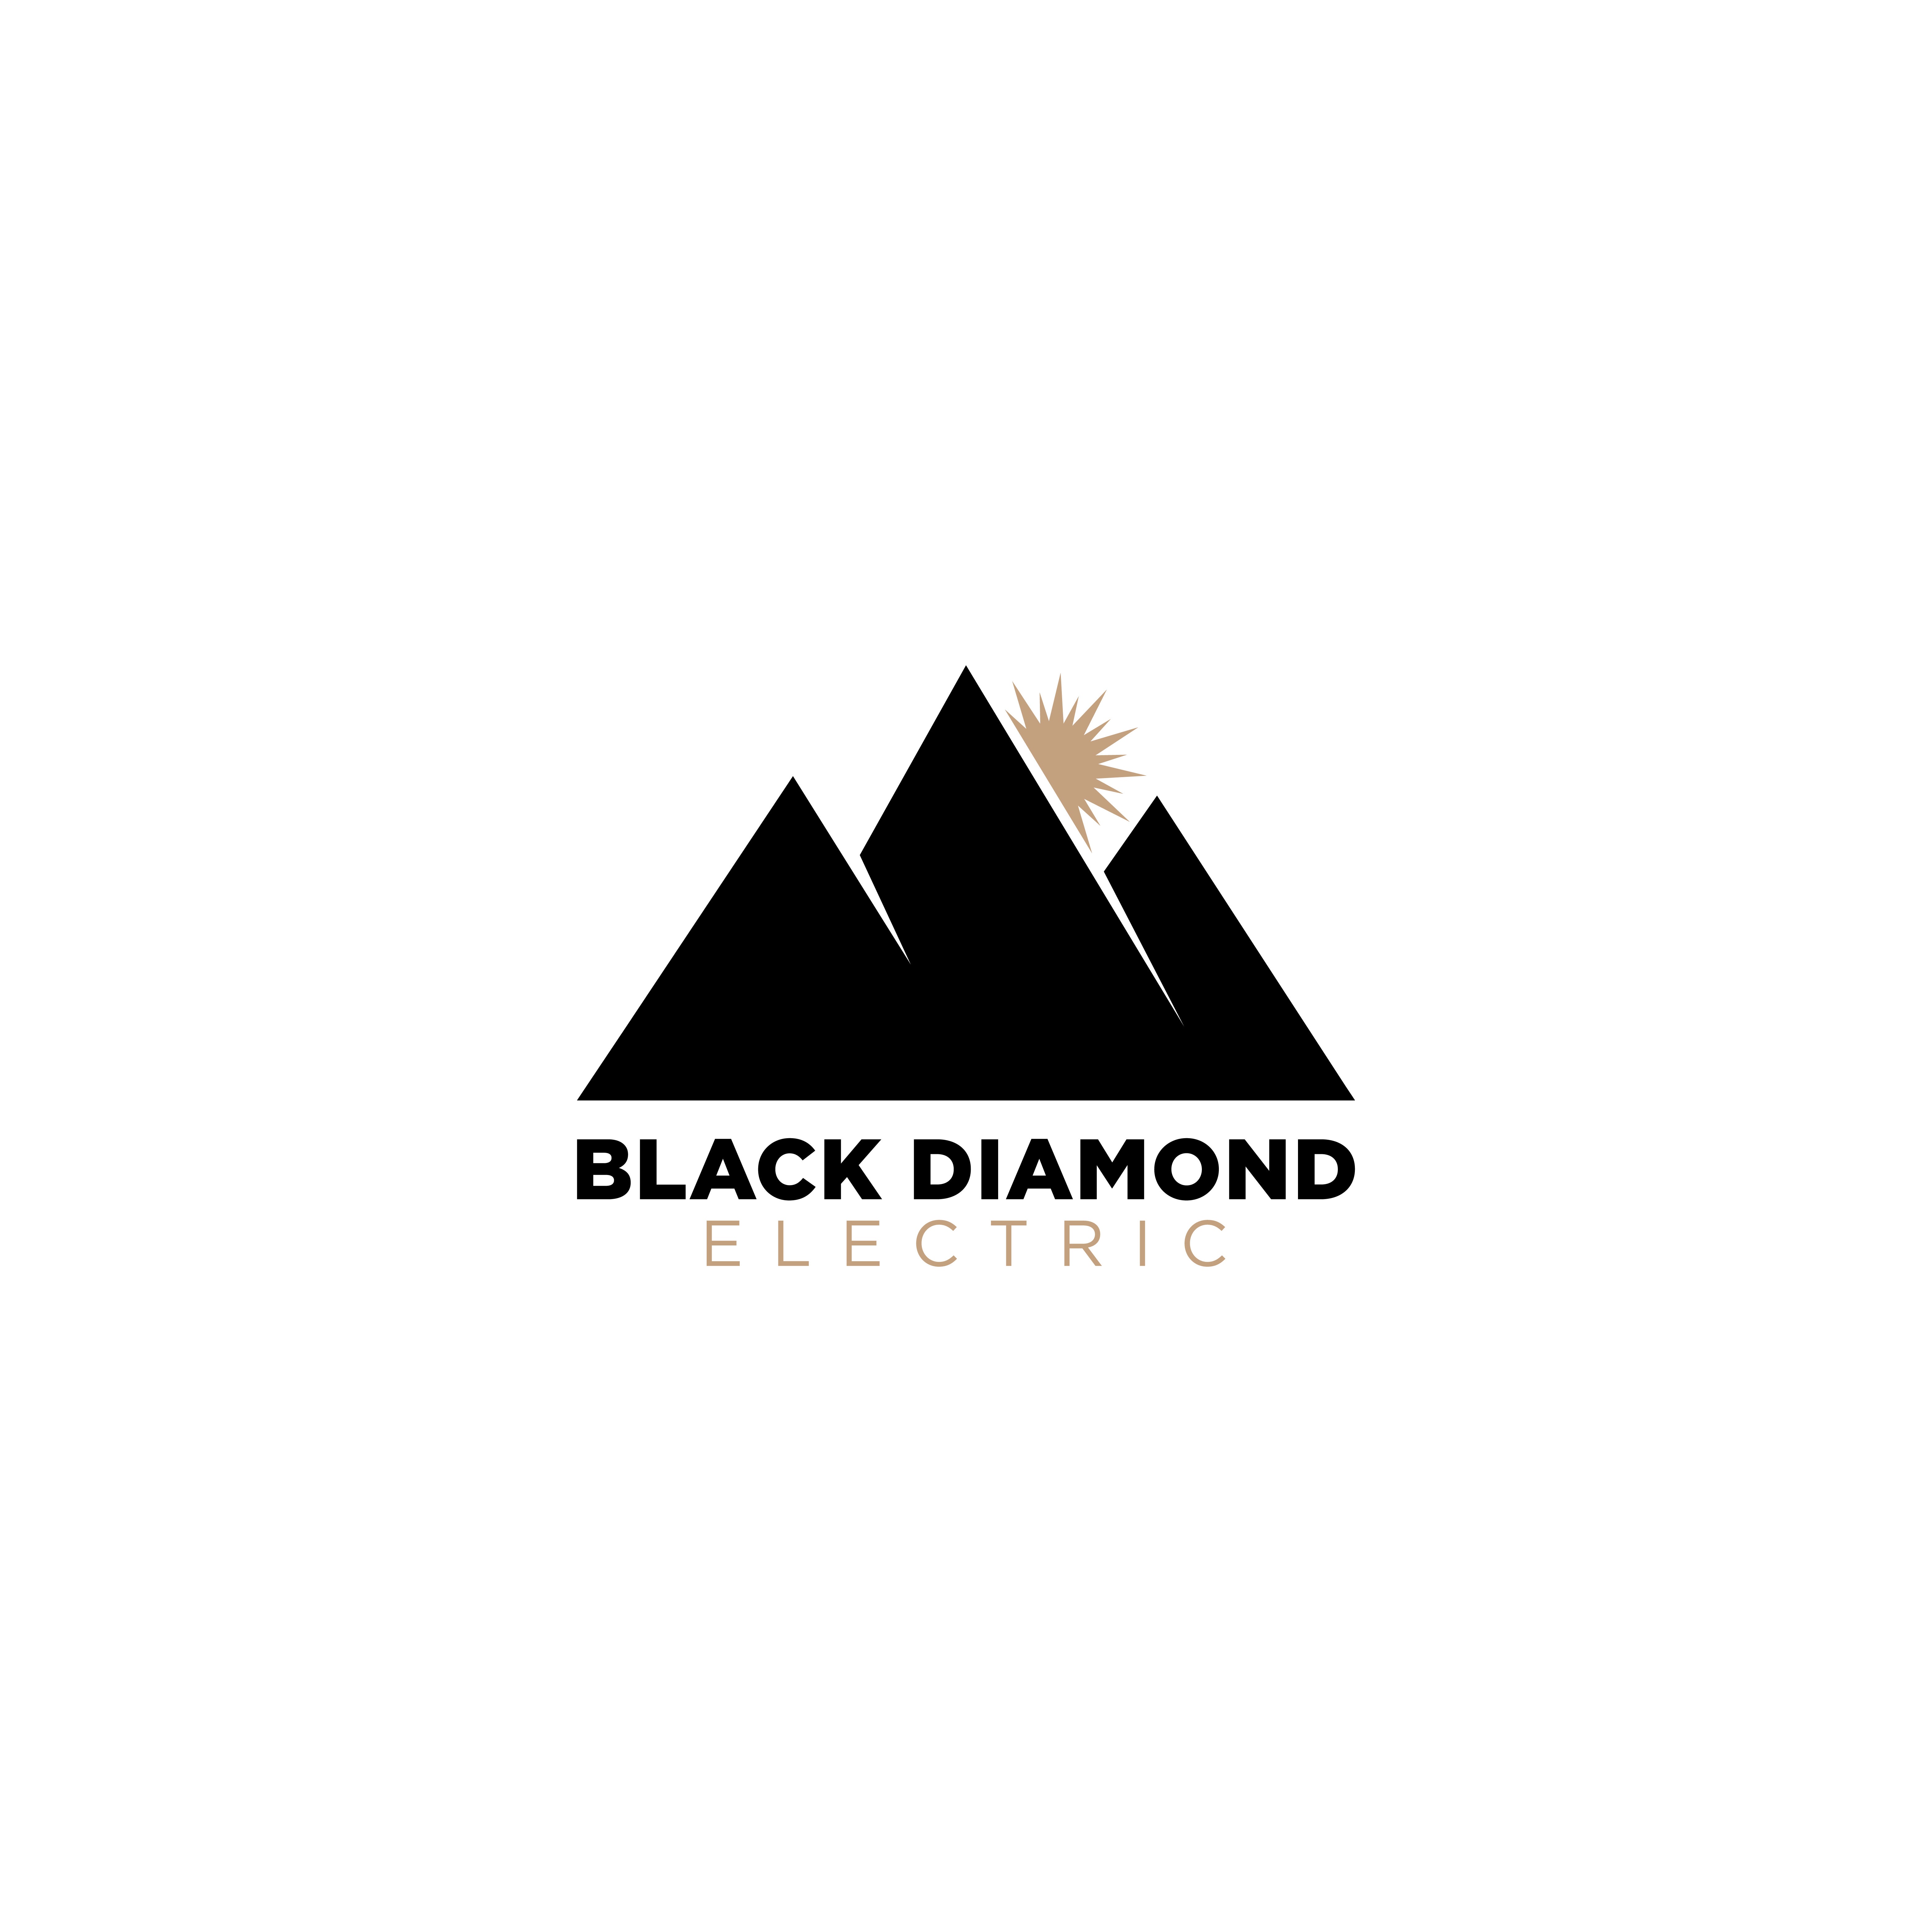 Black Diamond Electric logo